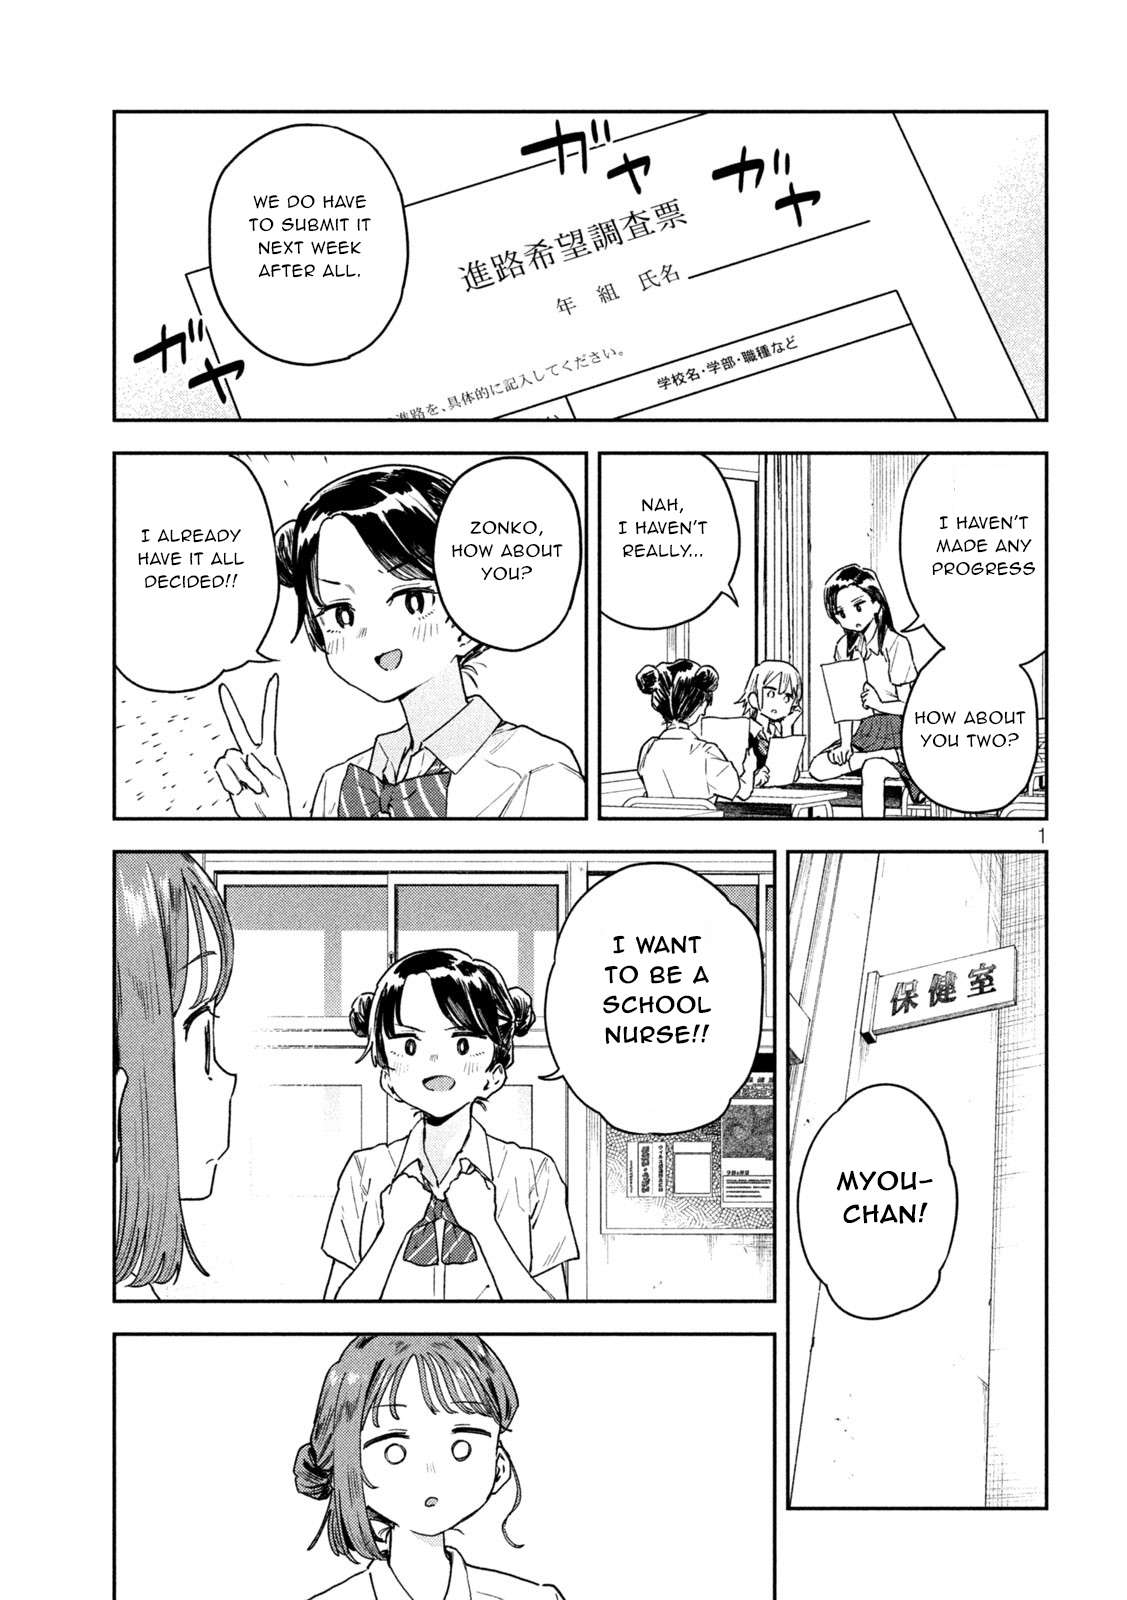 Miyo-Chan Sensei Said So - chapter 10 - #1